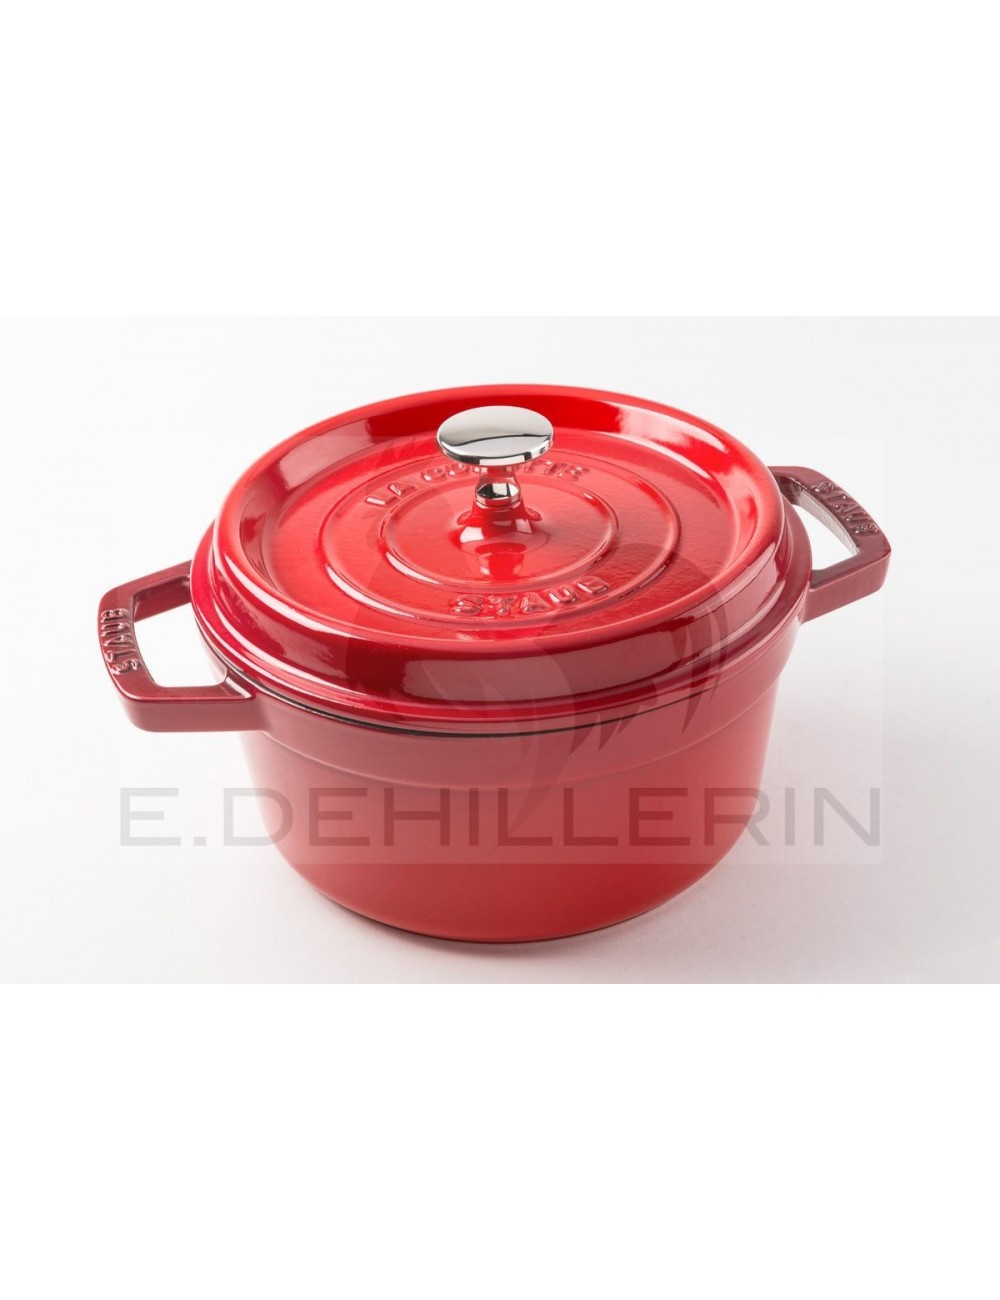 Staub Round Hot Plate Cast Iron Dish 20 cm - 2 colors